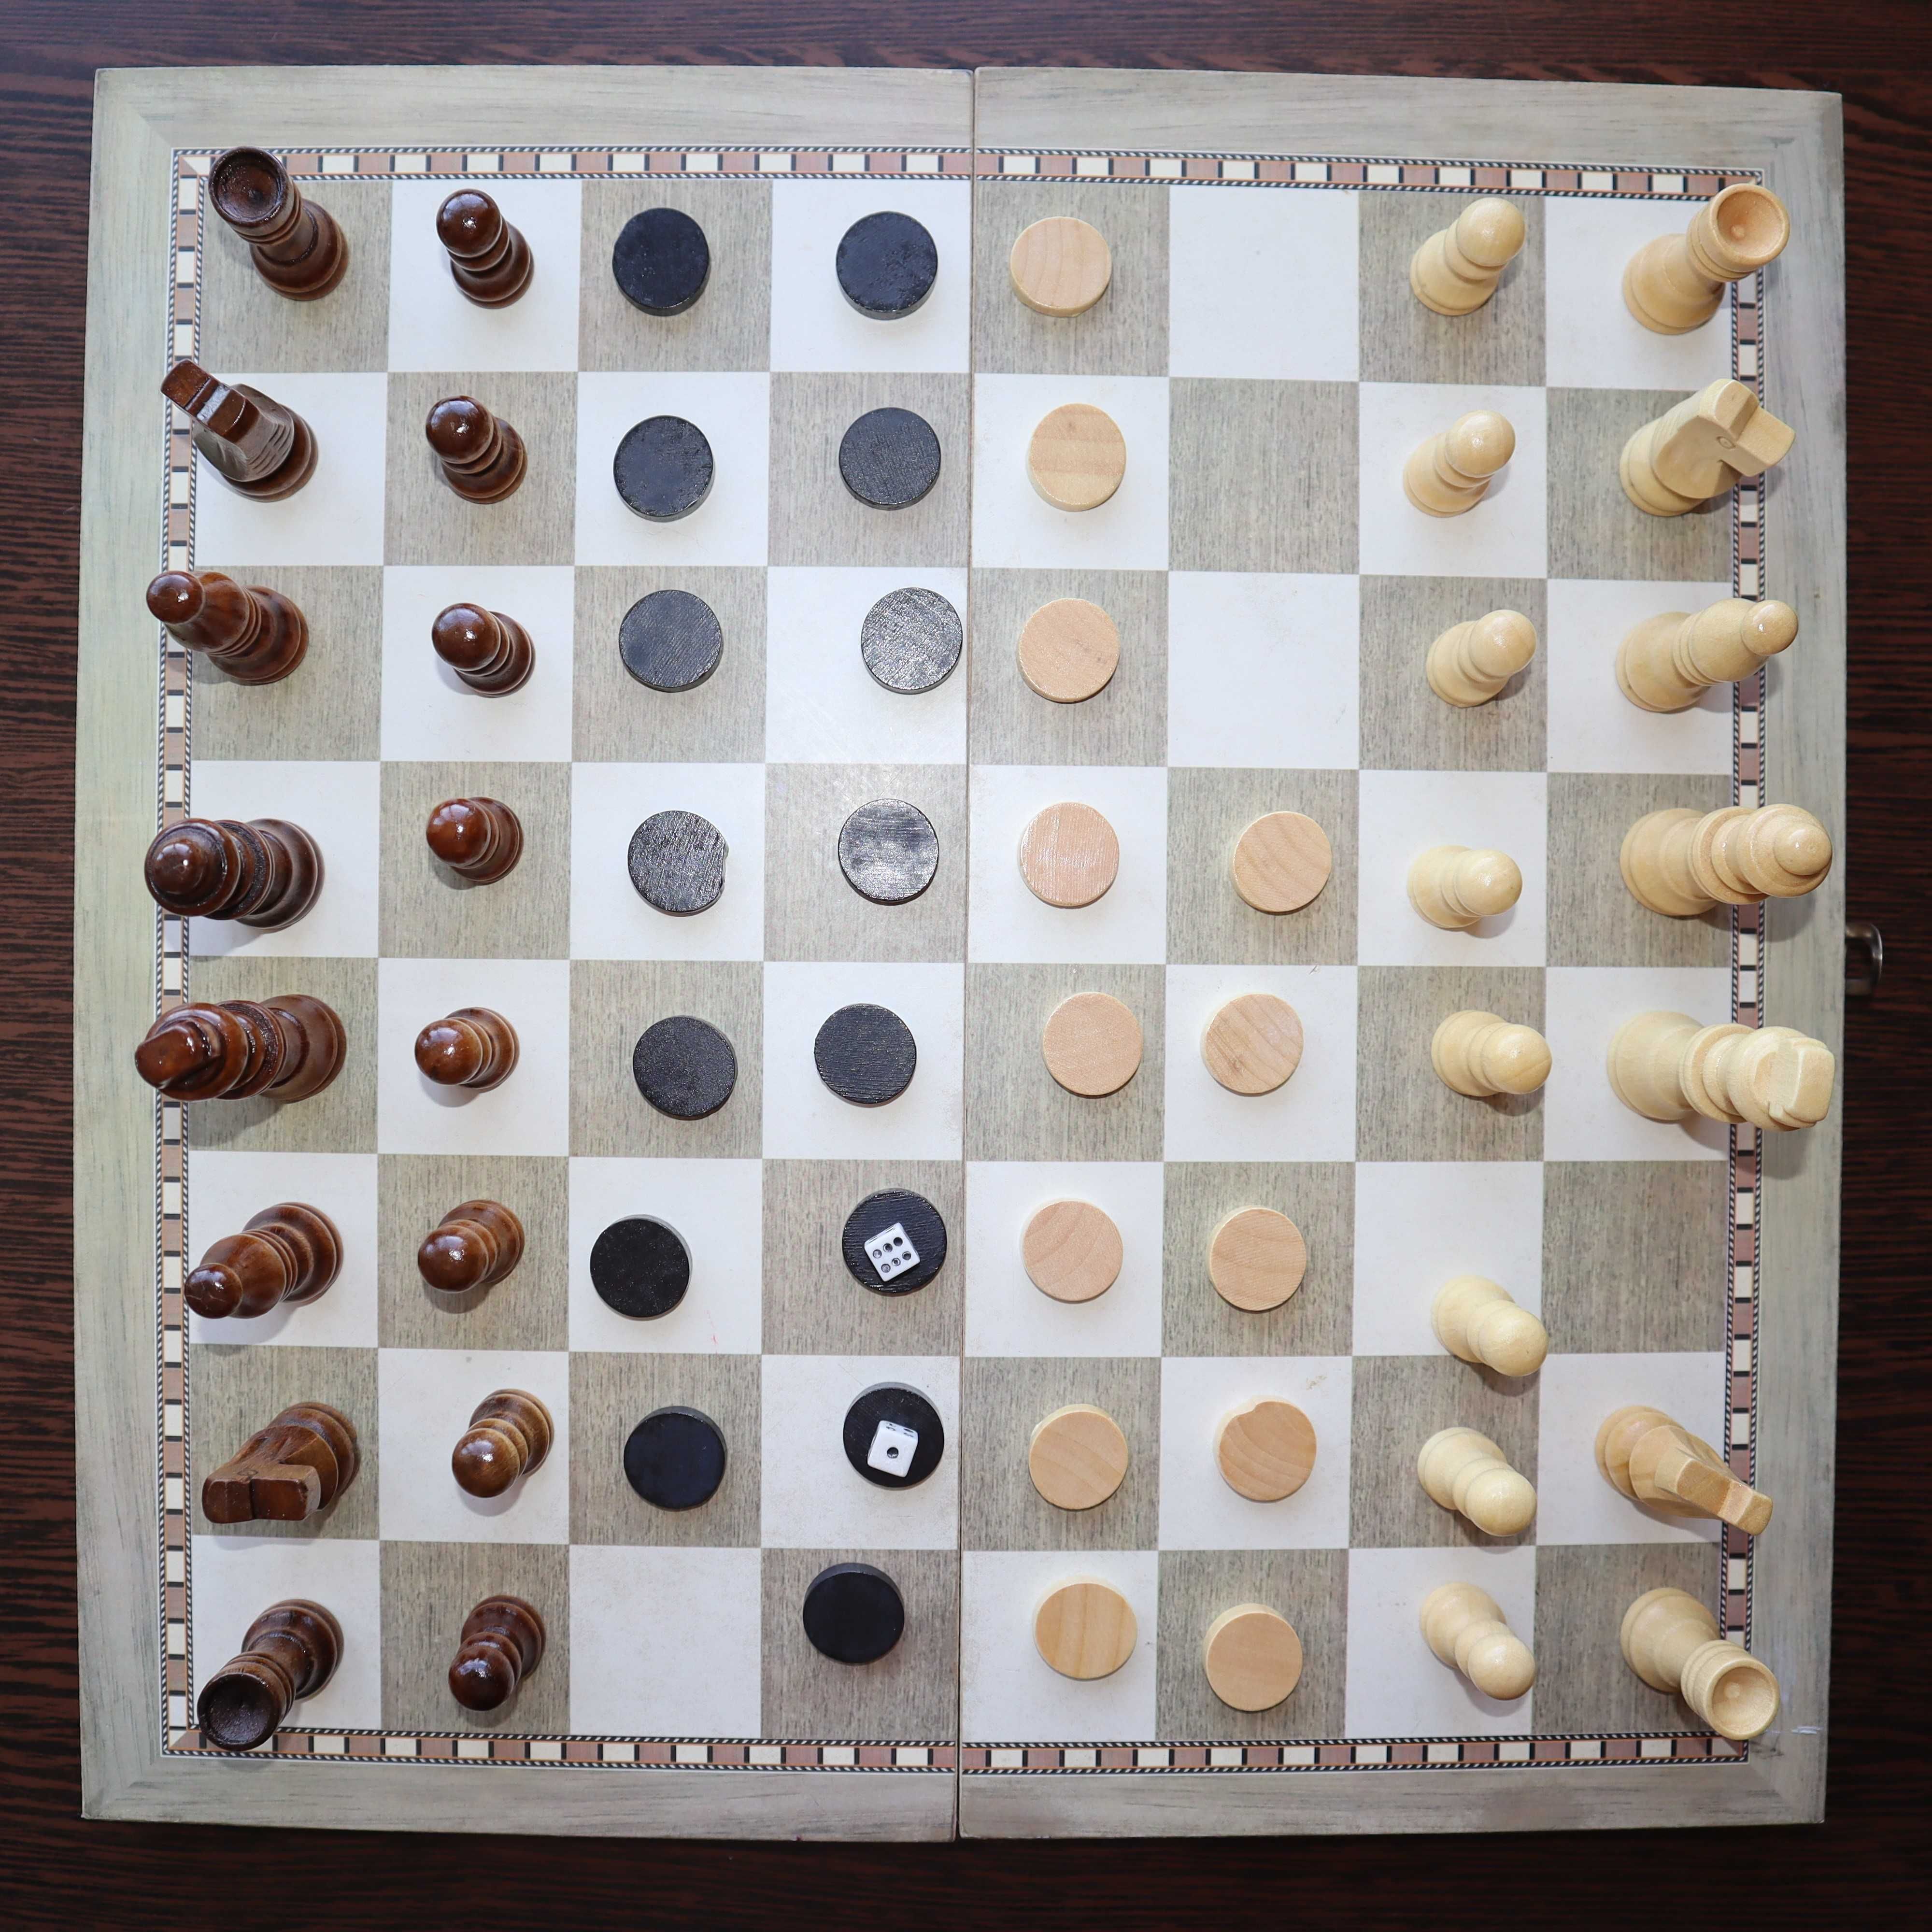 Шашки и шахматы на одной доске.